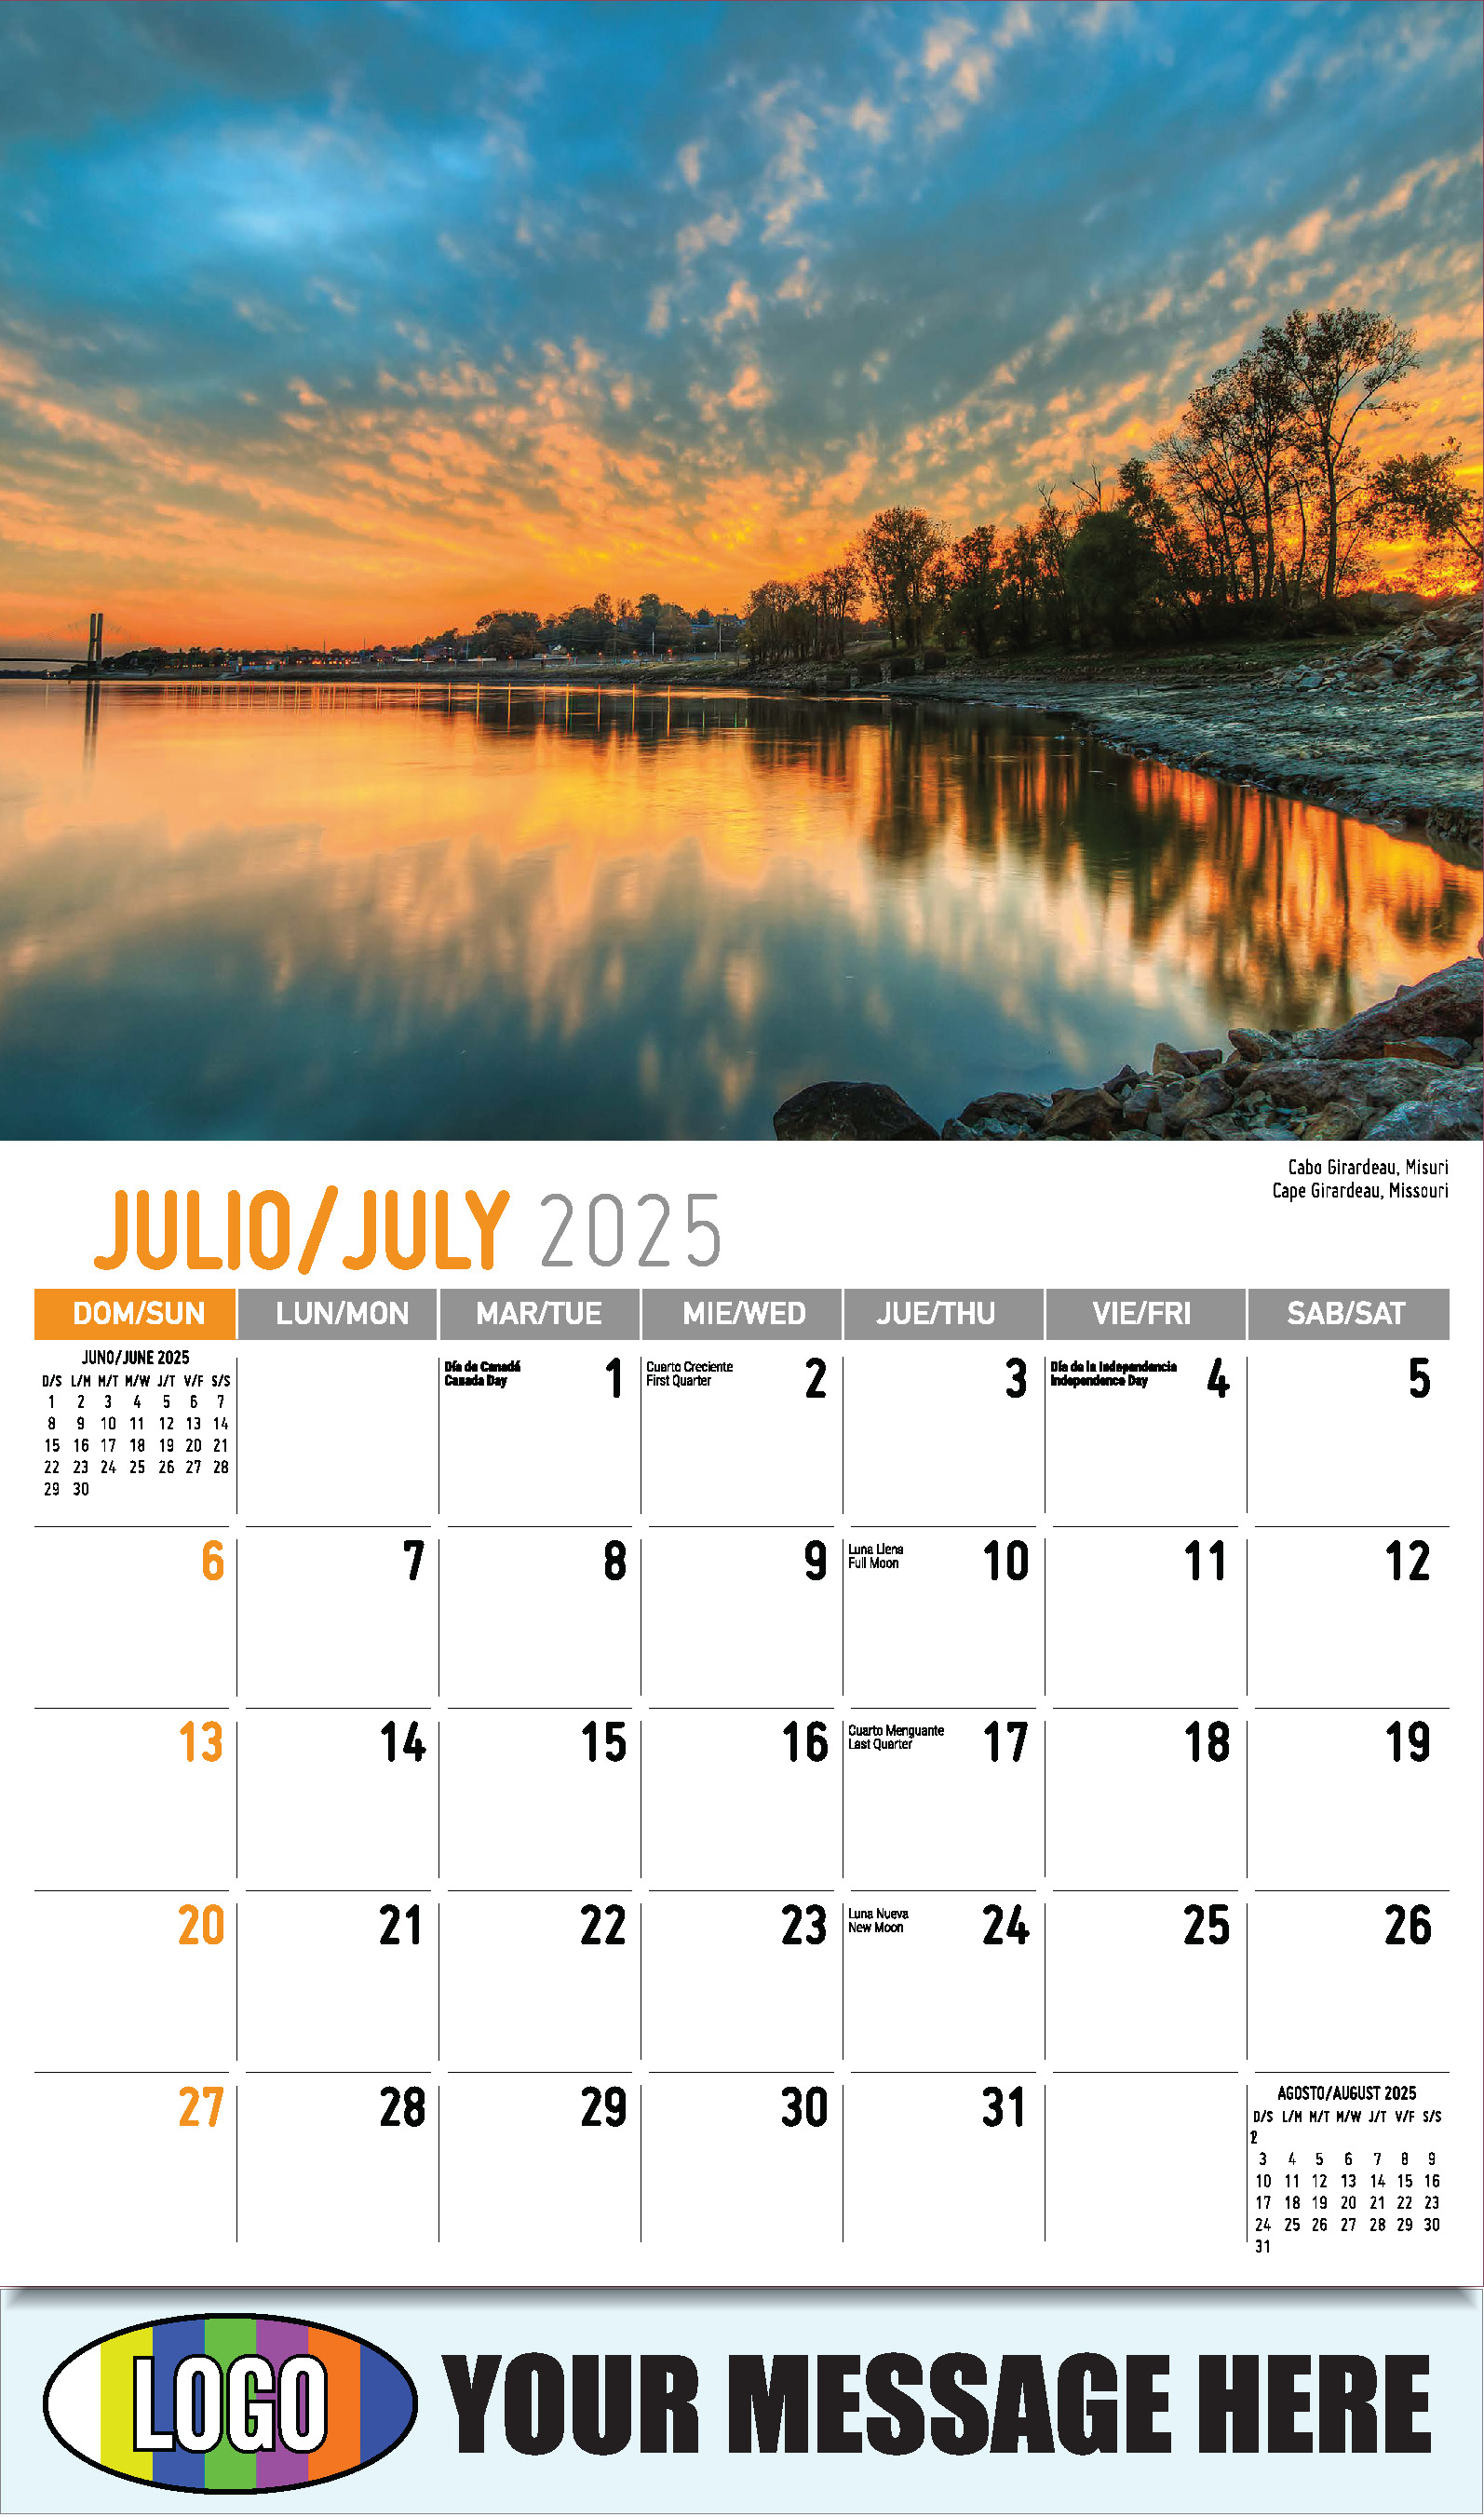 Scenes of America 2025 Bilingual Business Promo Calendar - July